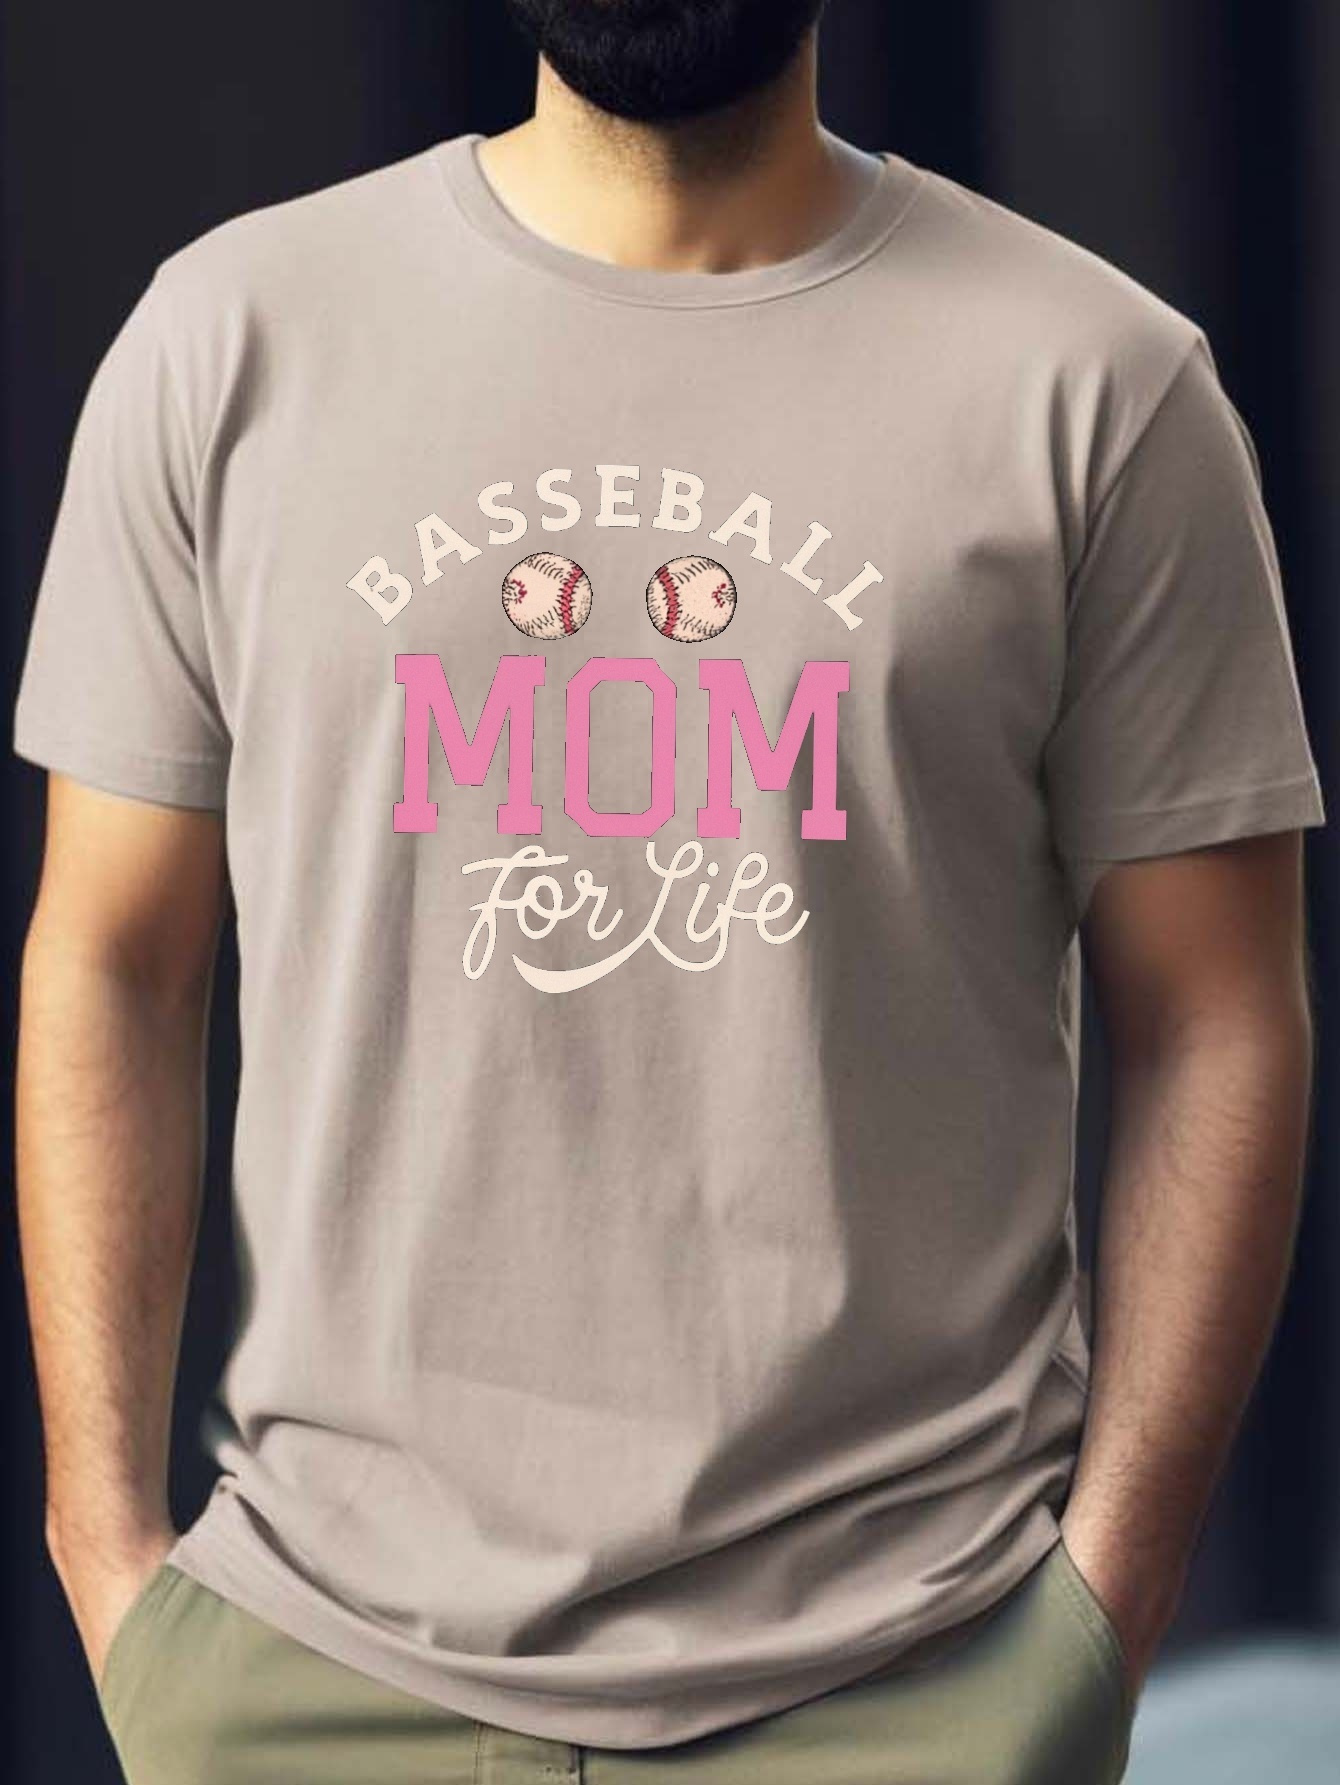 Baseball Mom Life T-Shirt, Baseball Mom Shirts